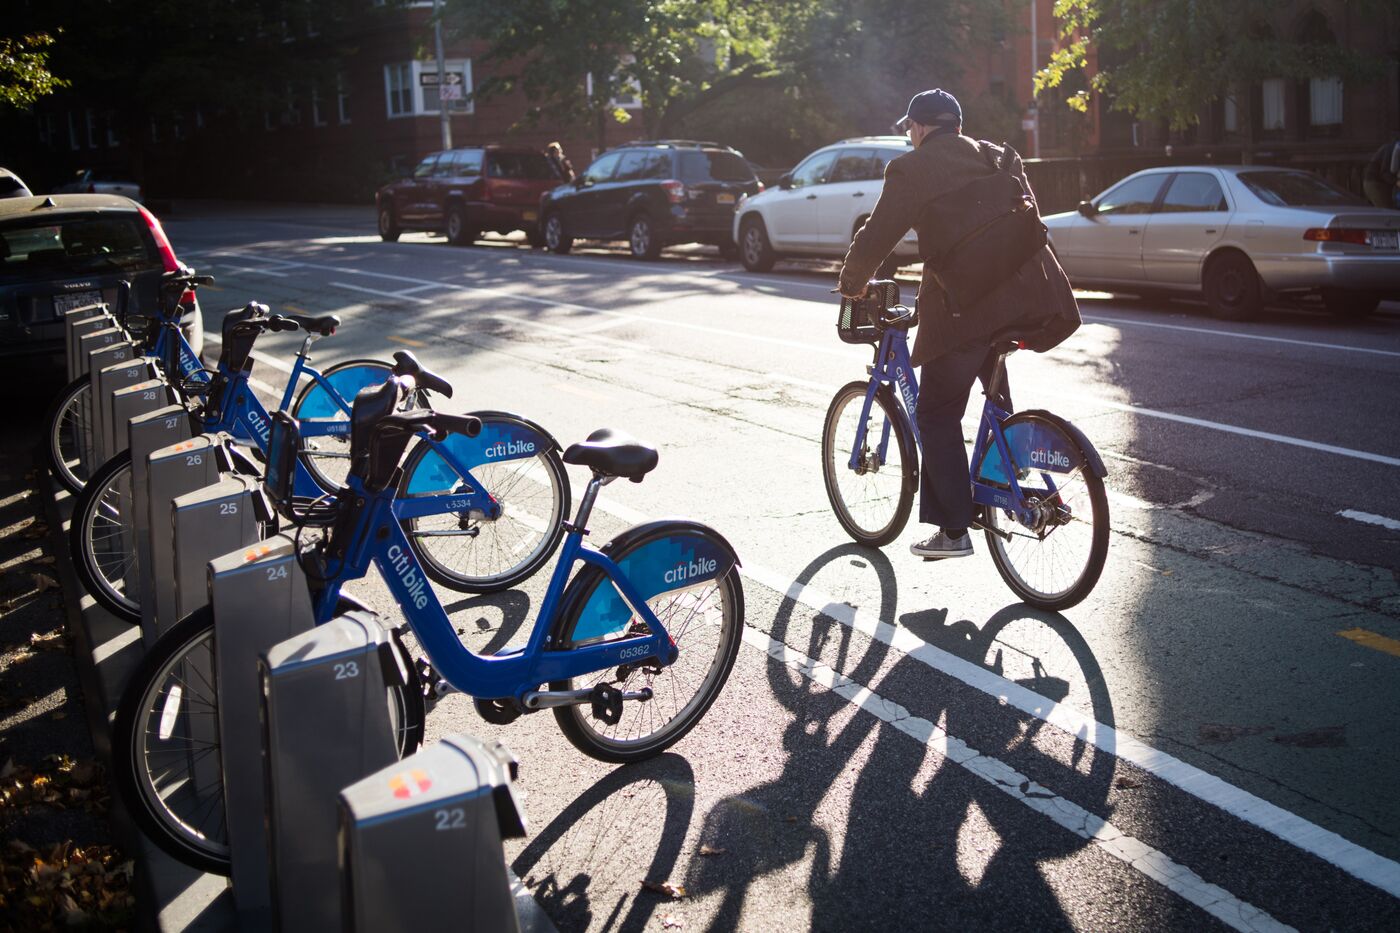 In August, New York’s Citi Bike program&nbsp;had its highest ridership ever: 3.7 million rides.